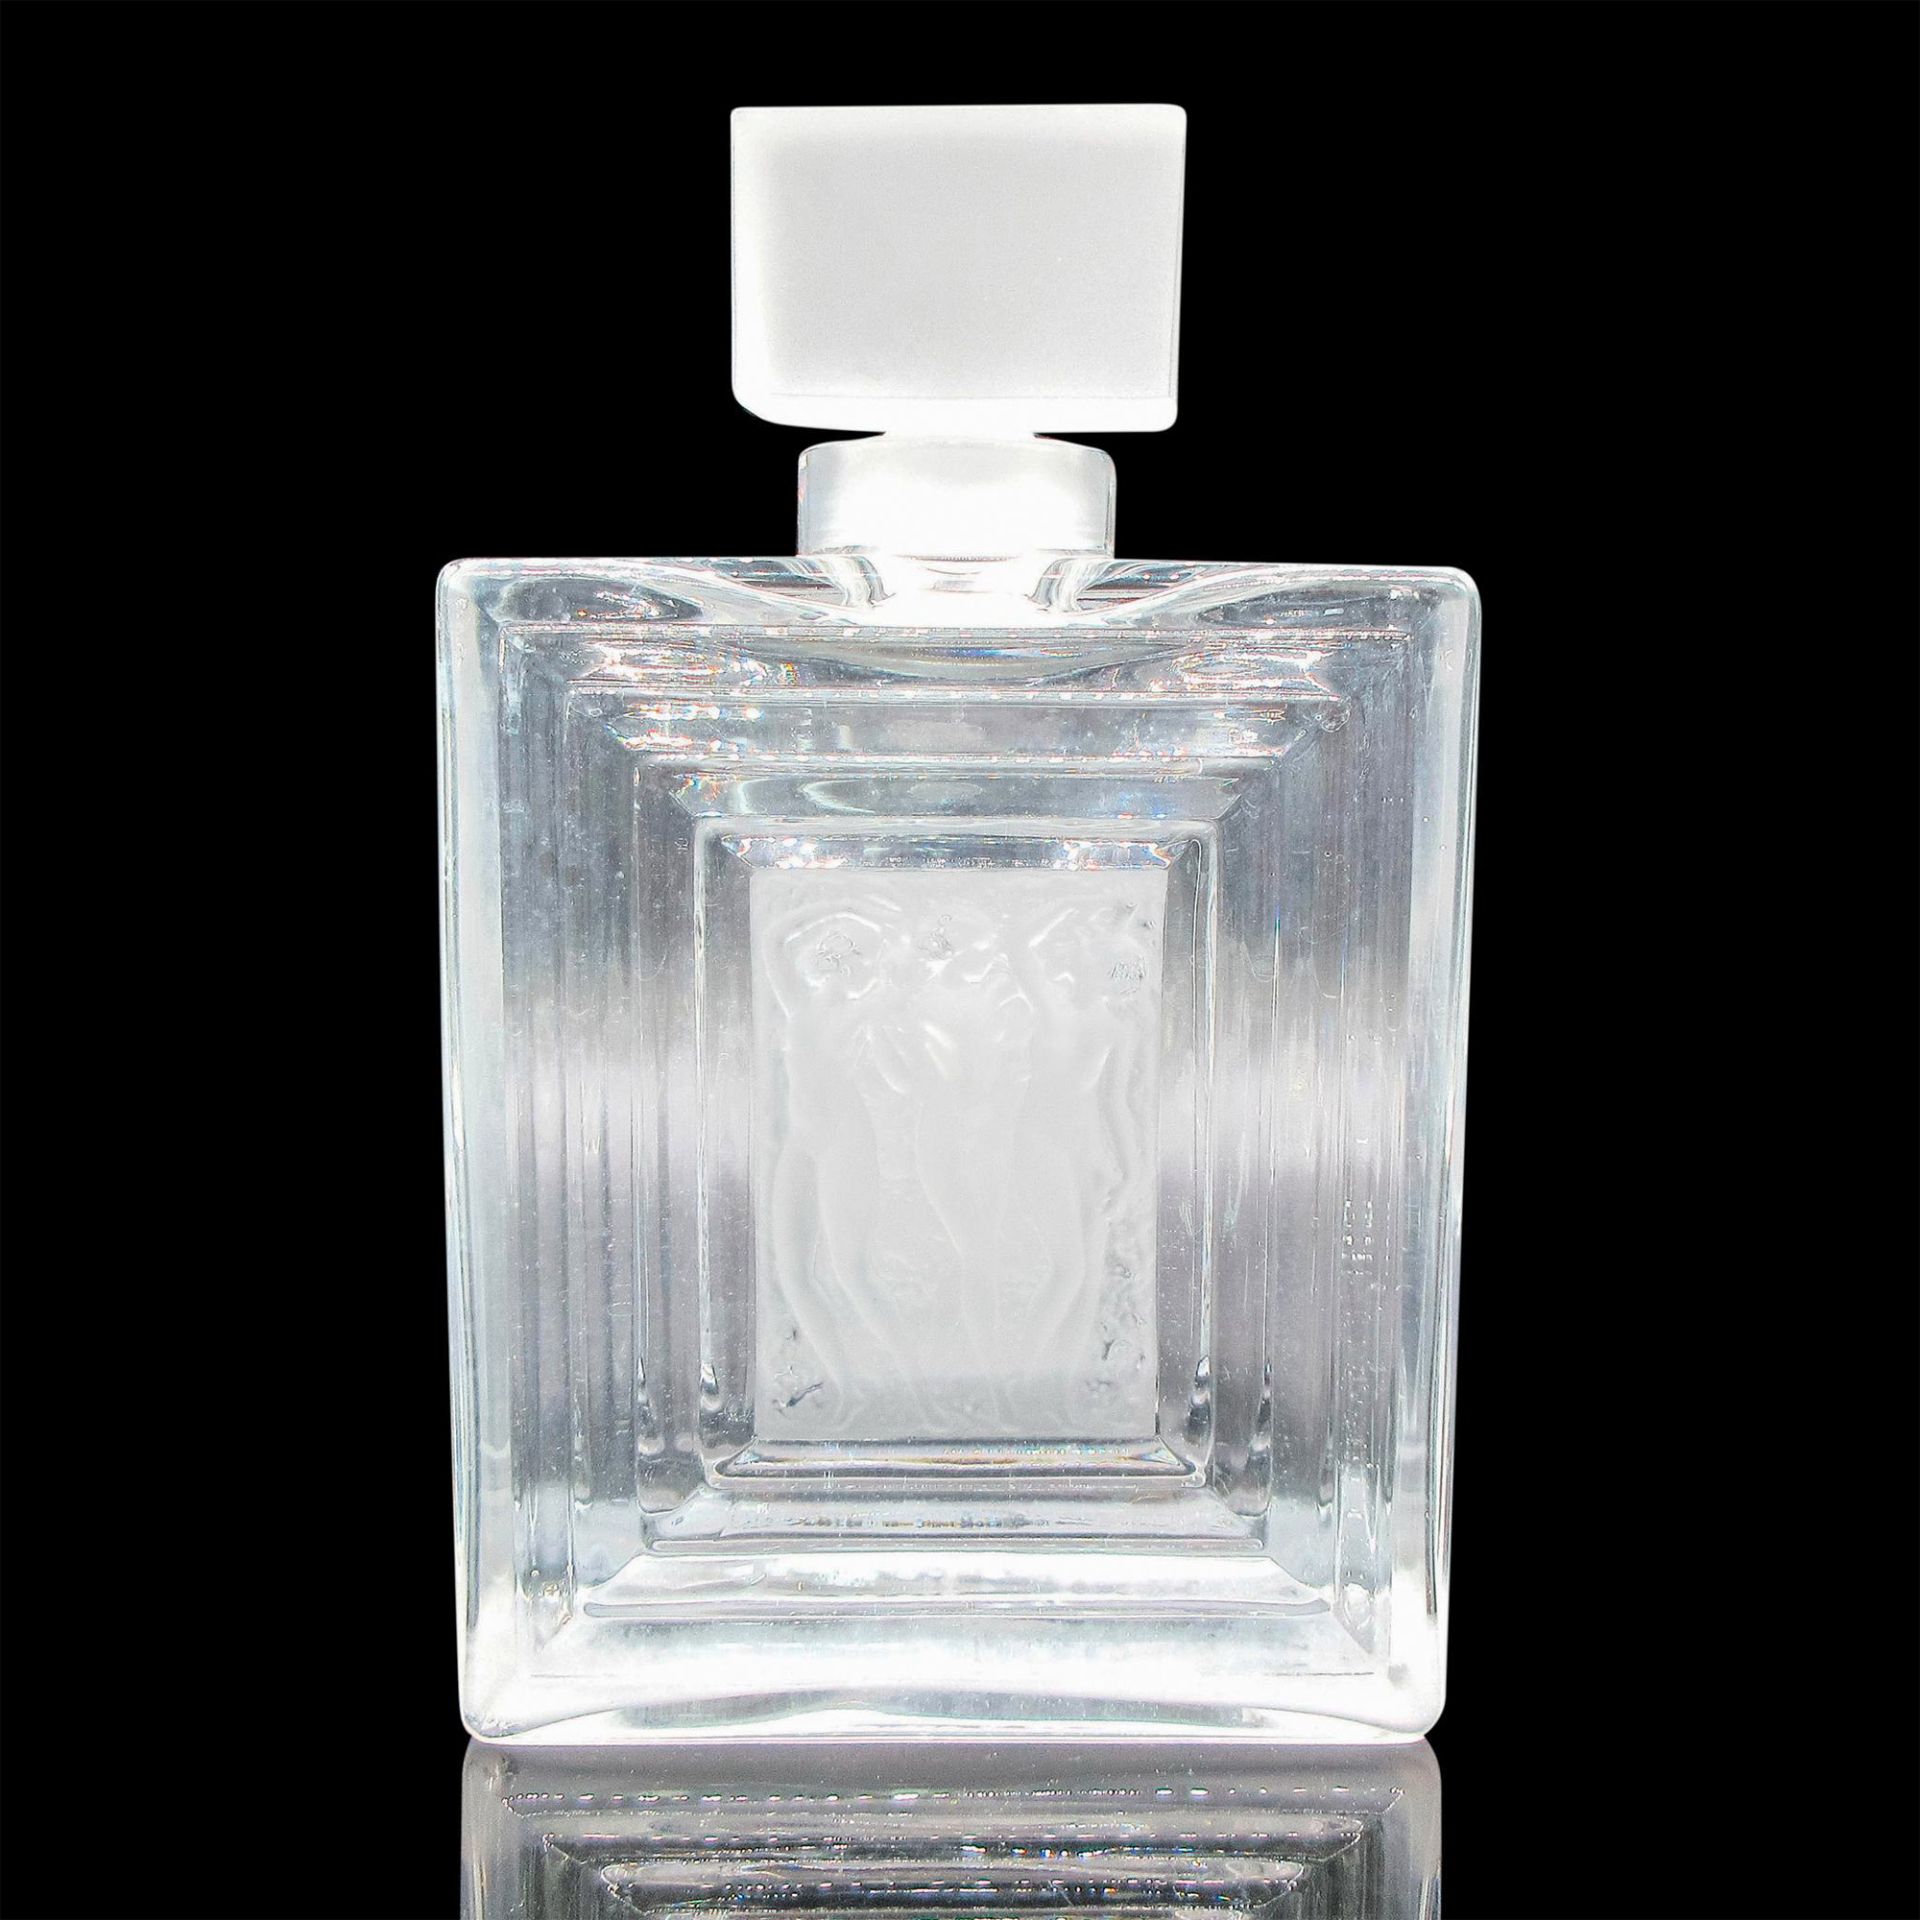 Lalique Crystal Perfume Bottle, Duncan